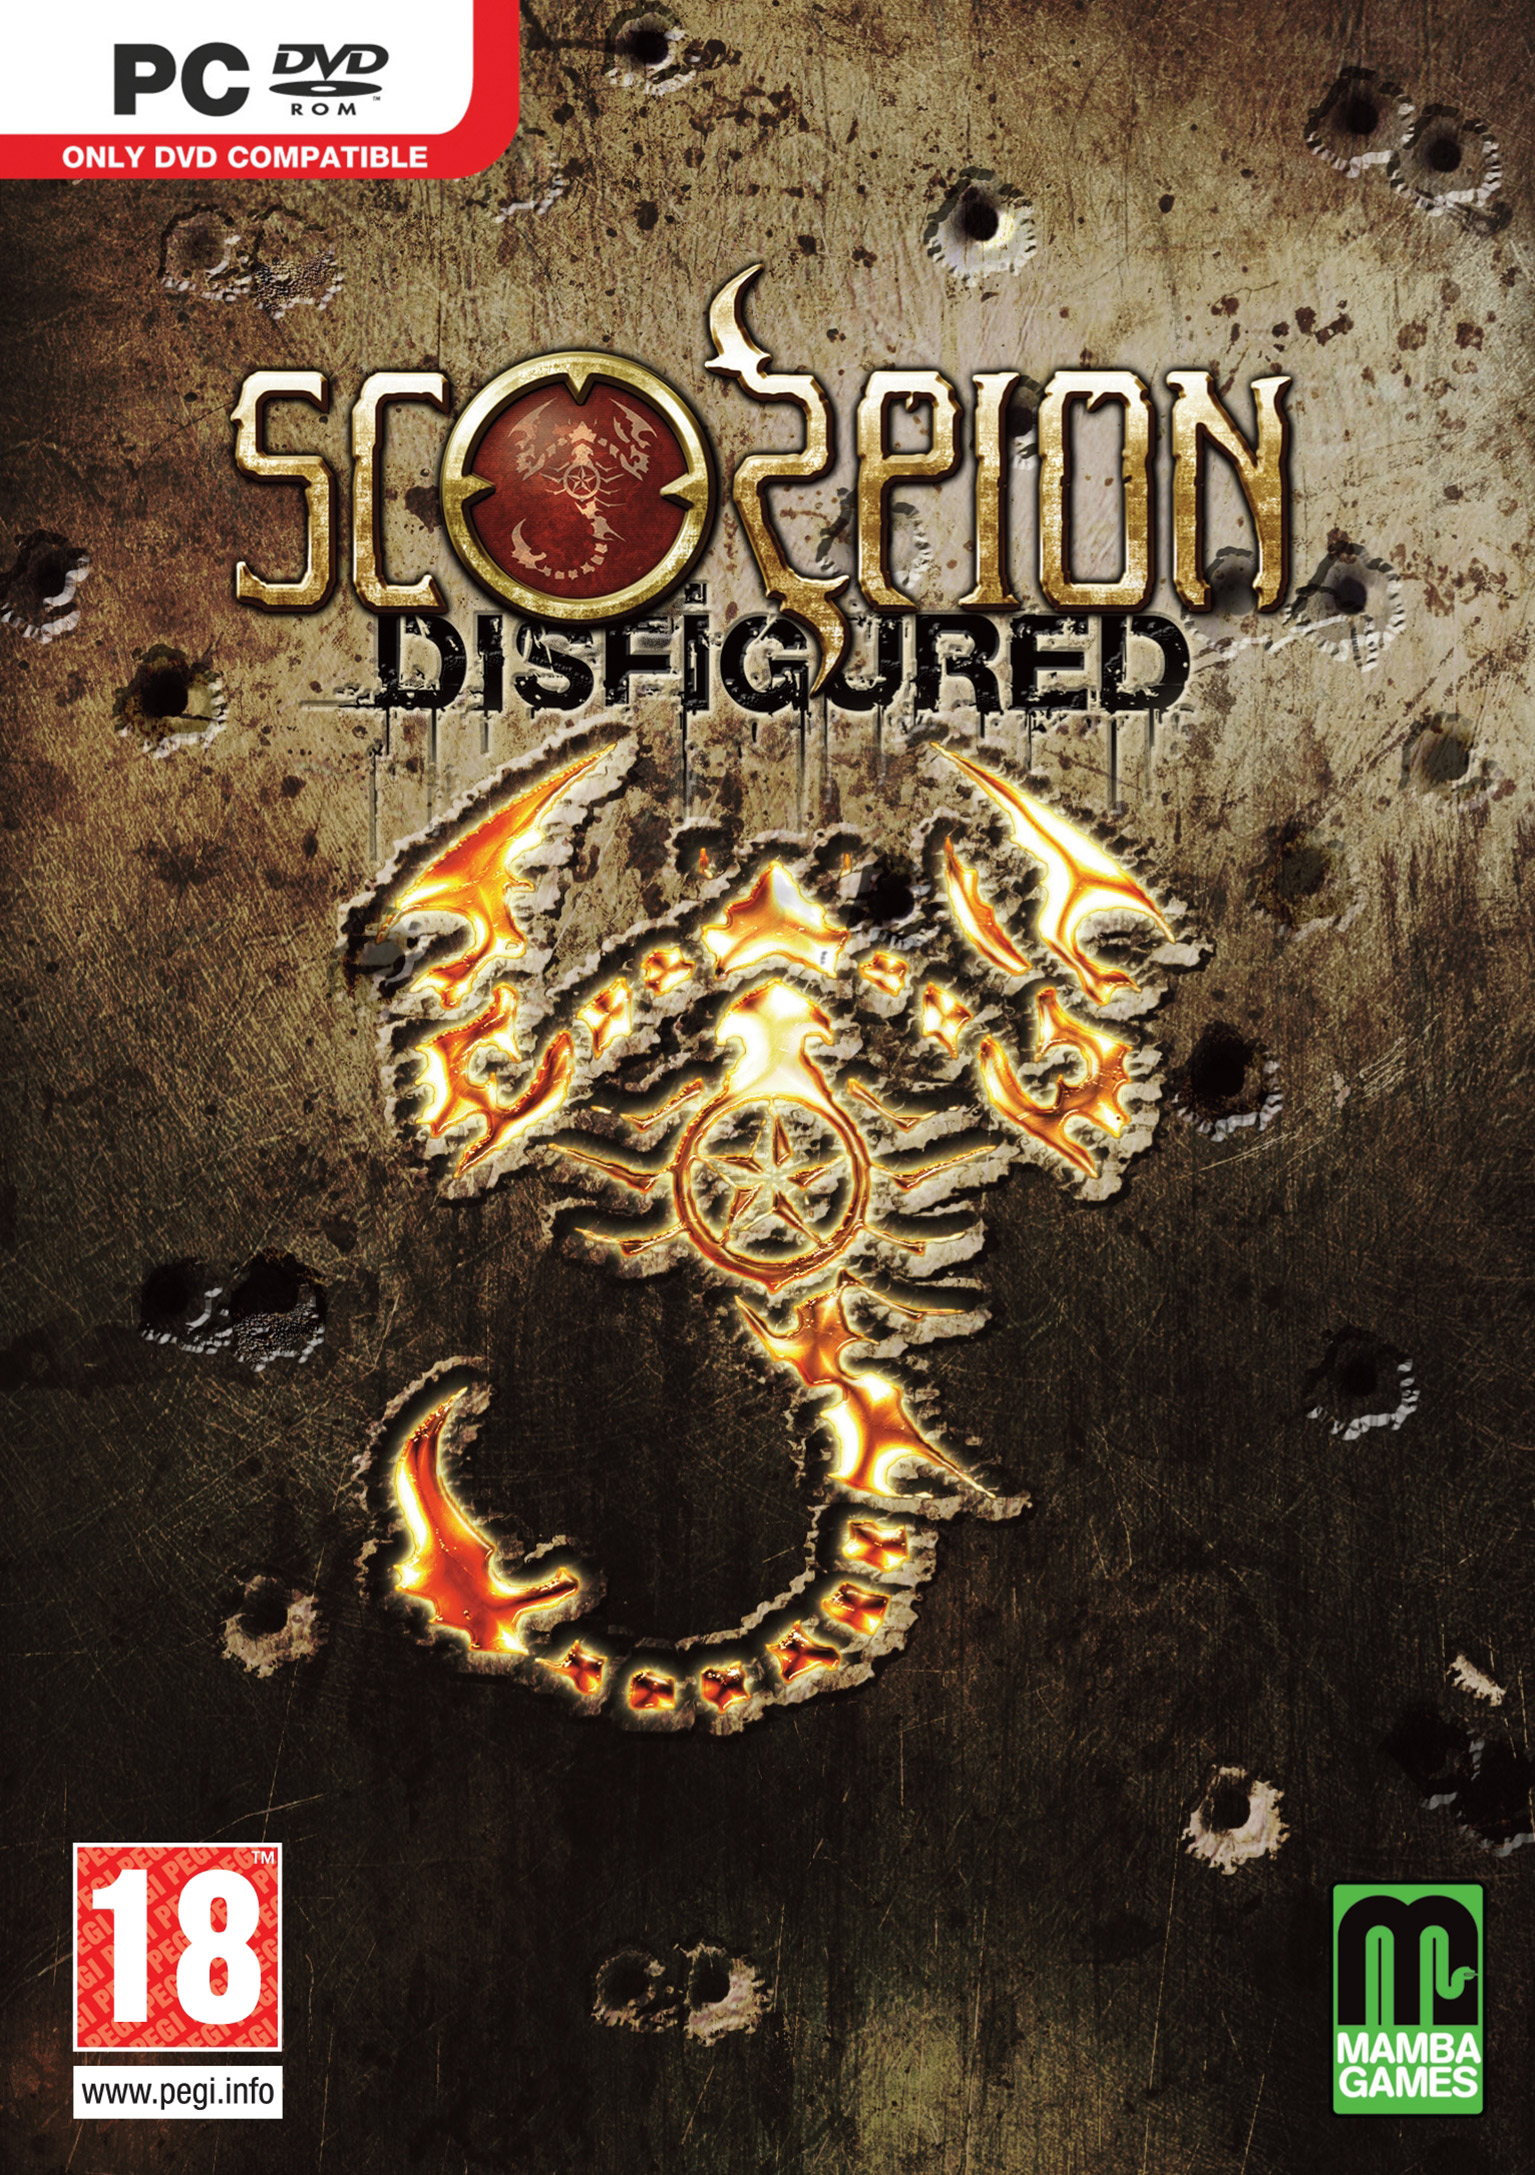 Scorpion: Disfigured - pedn DVD obal